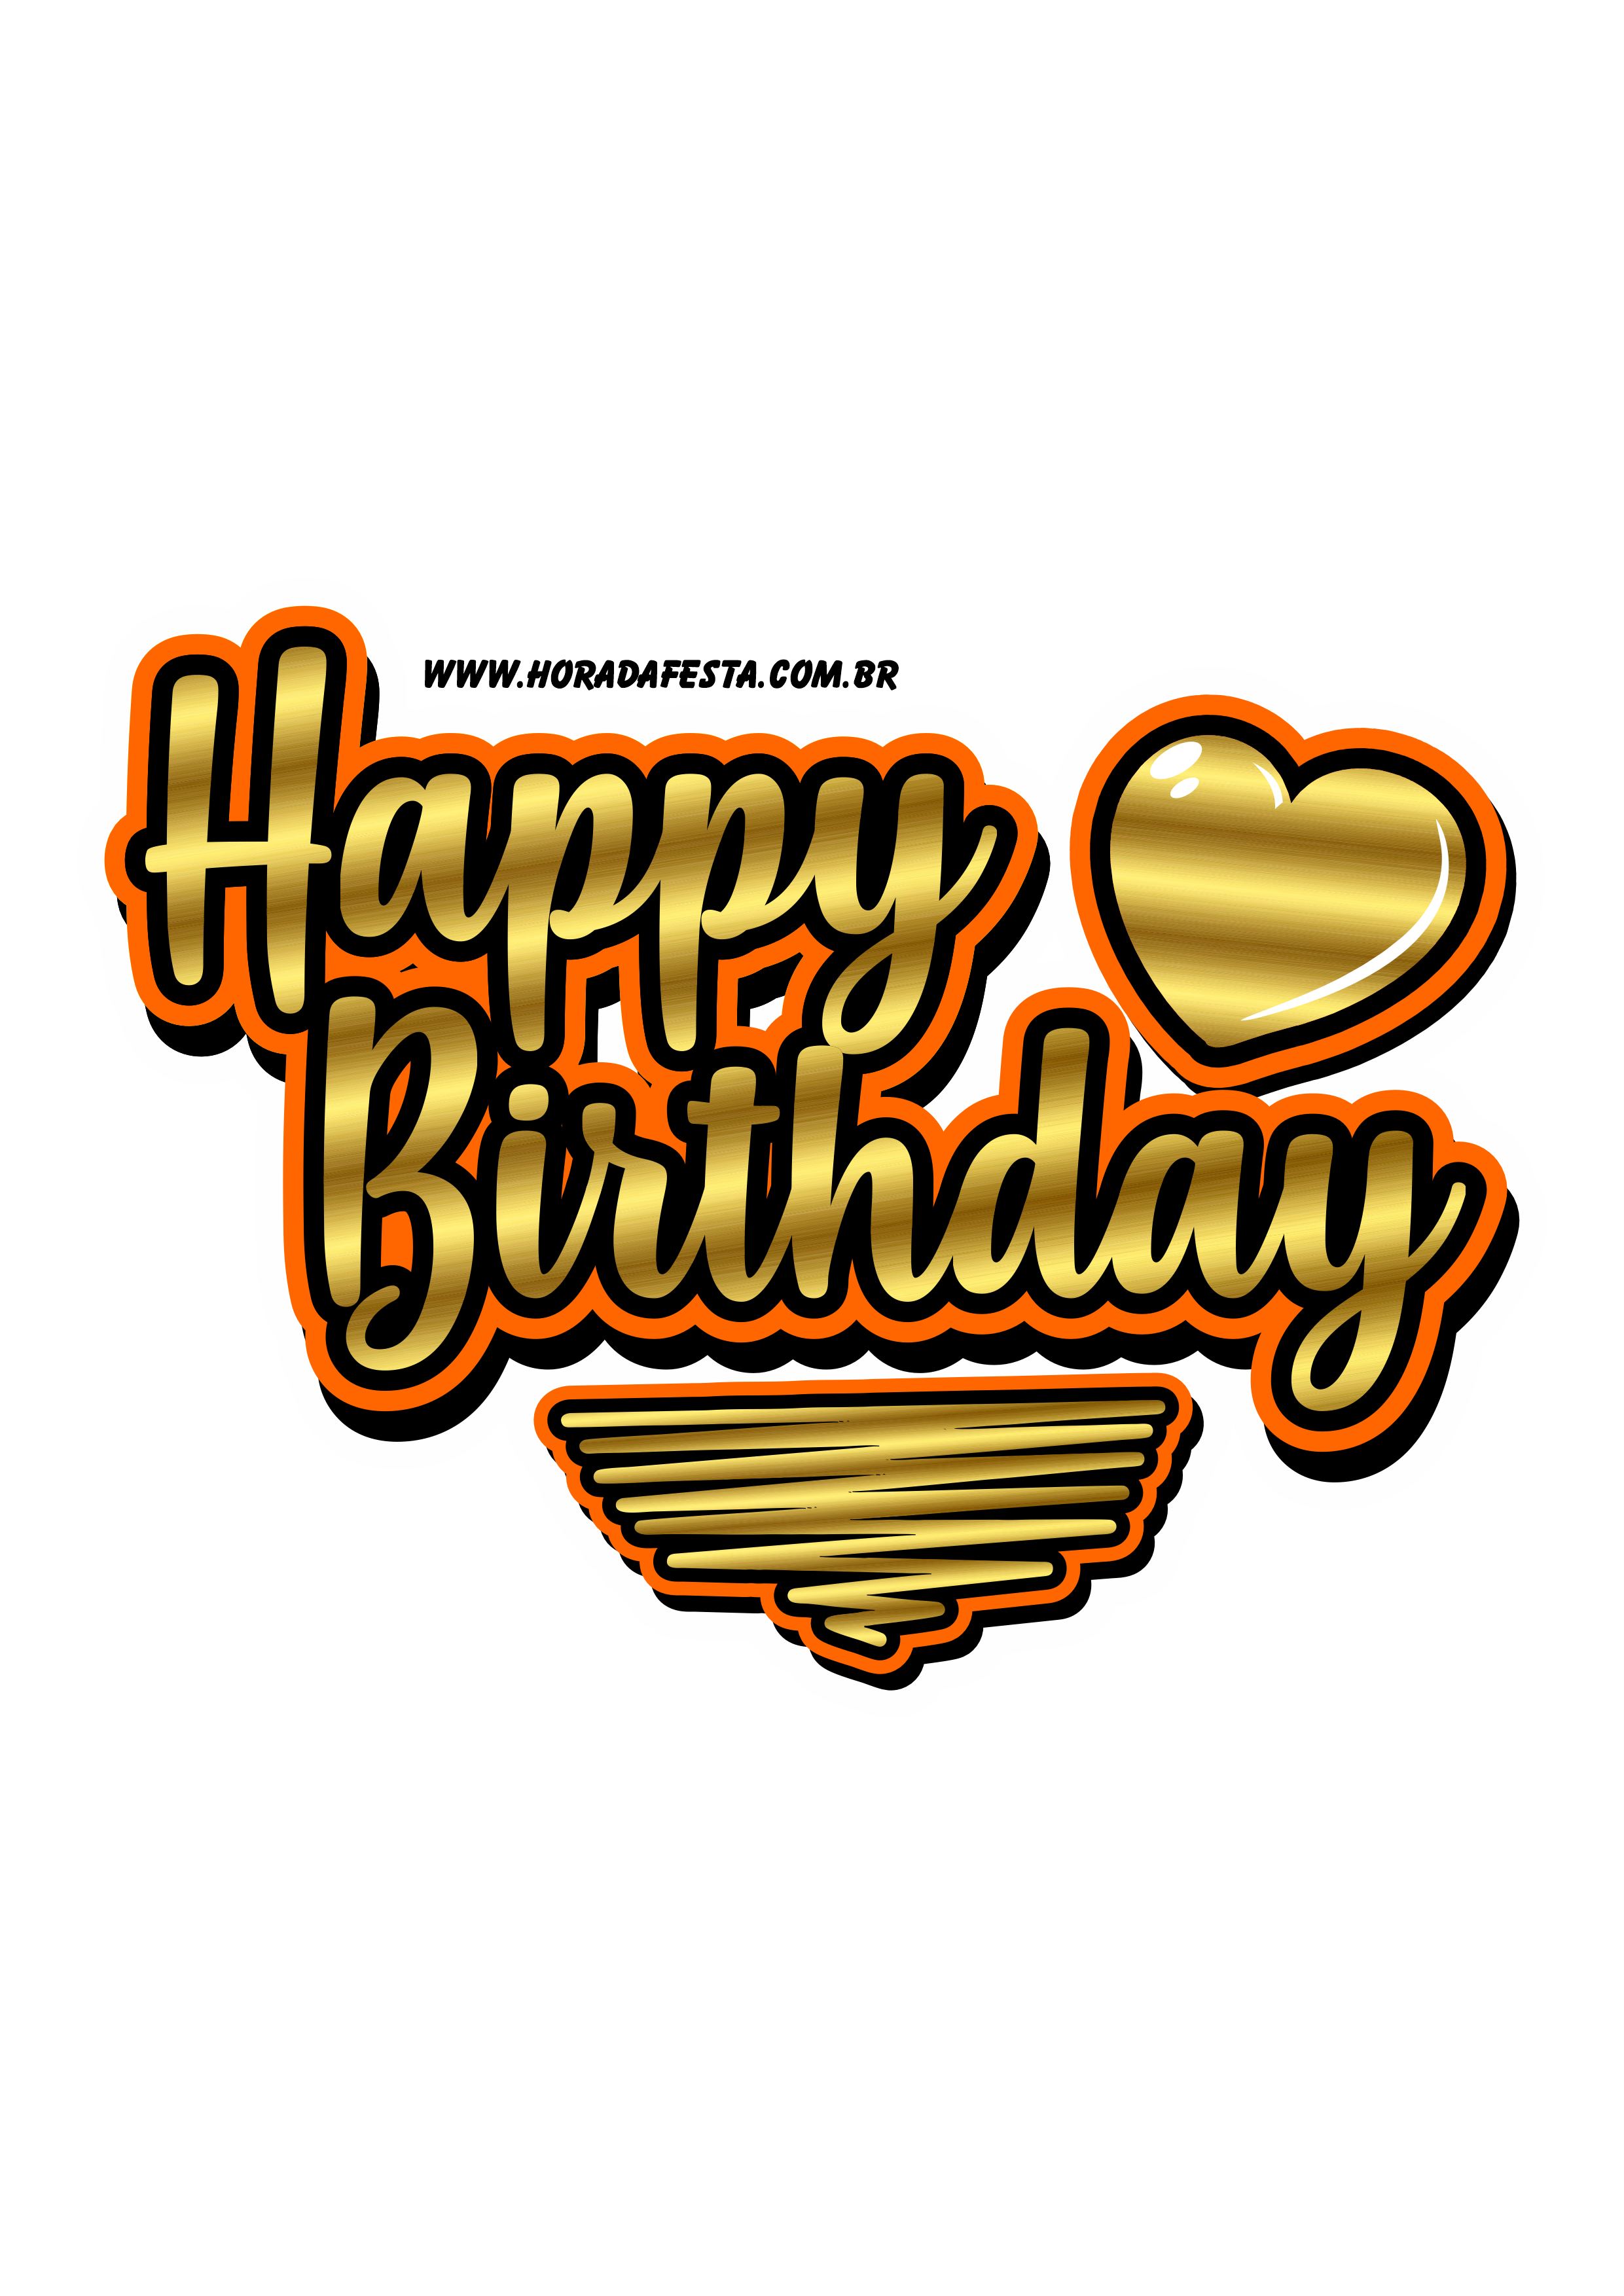 Logo Happy Birthday dourado com laranja png